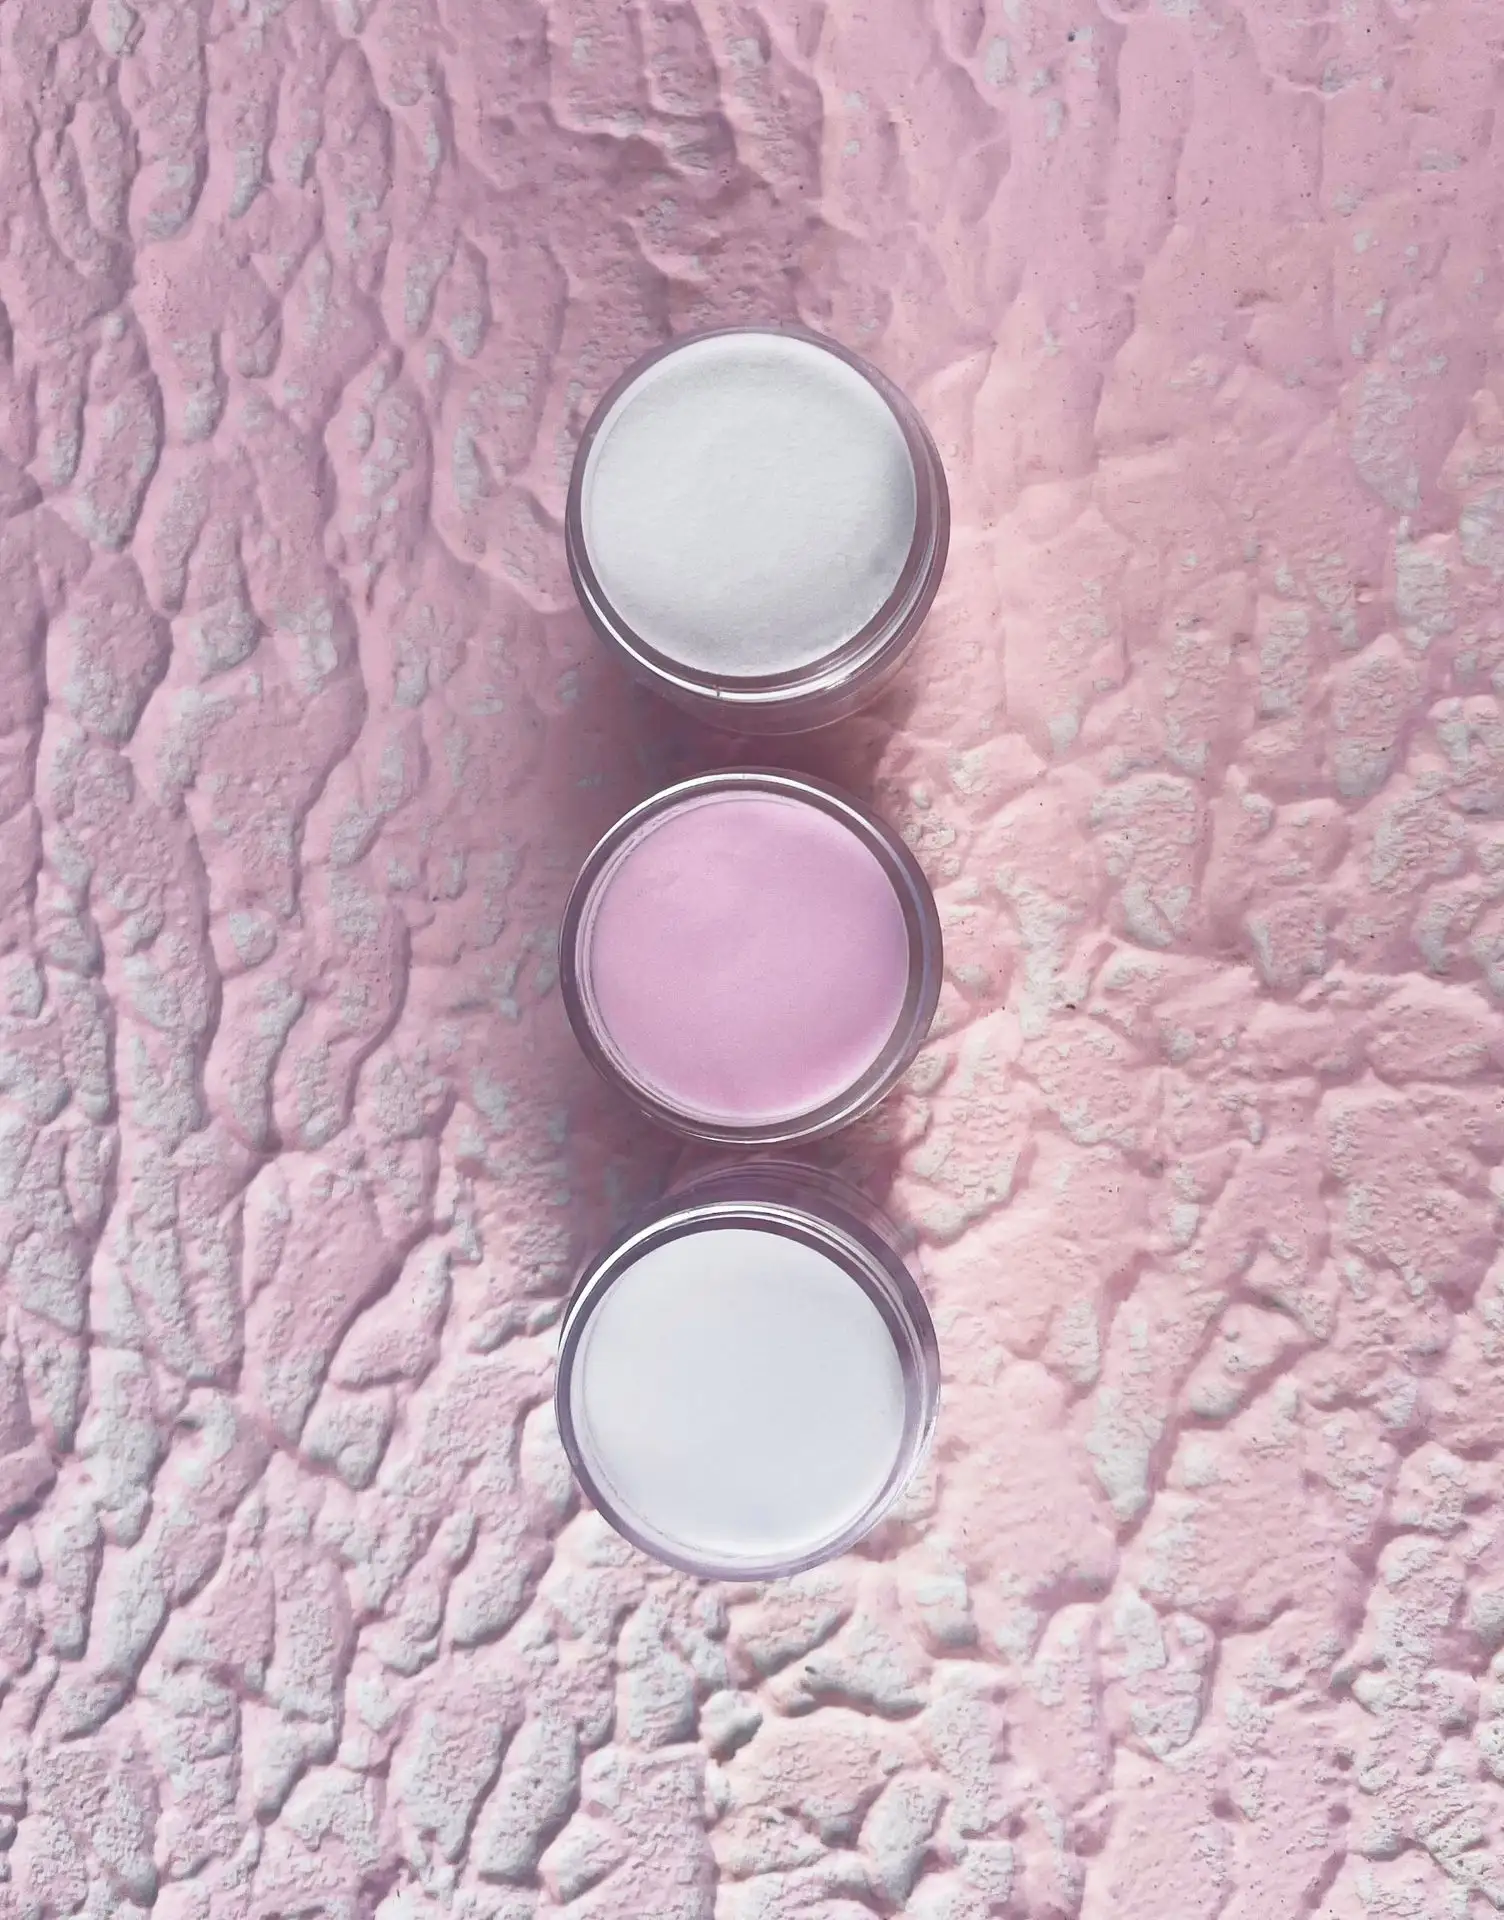 Wholesale Natural Pink And White Colors Acrylic Nails Bulk Acrylic Powder For Dipping Nail